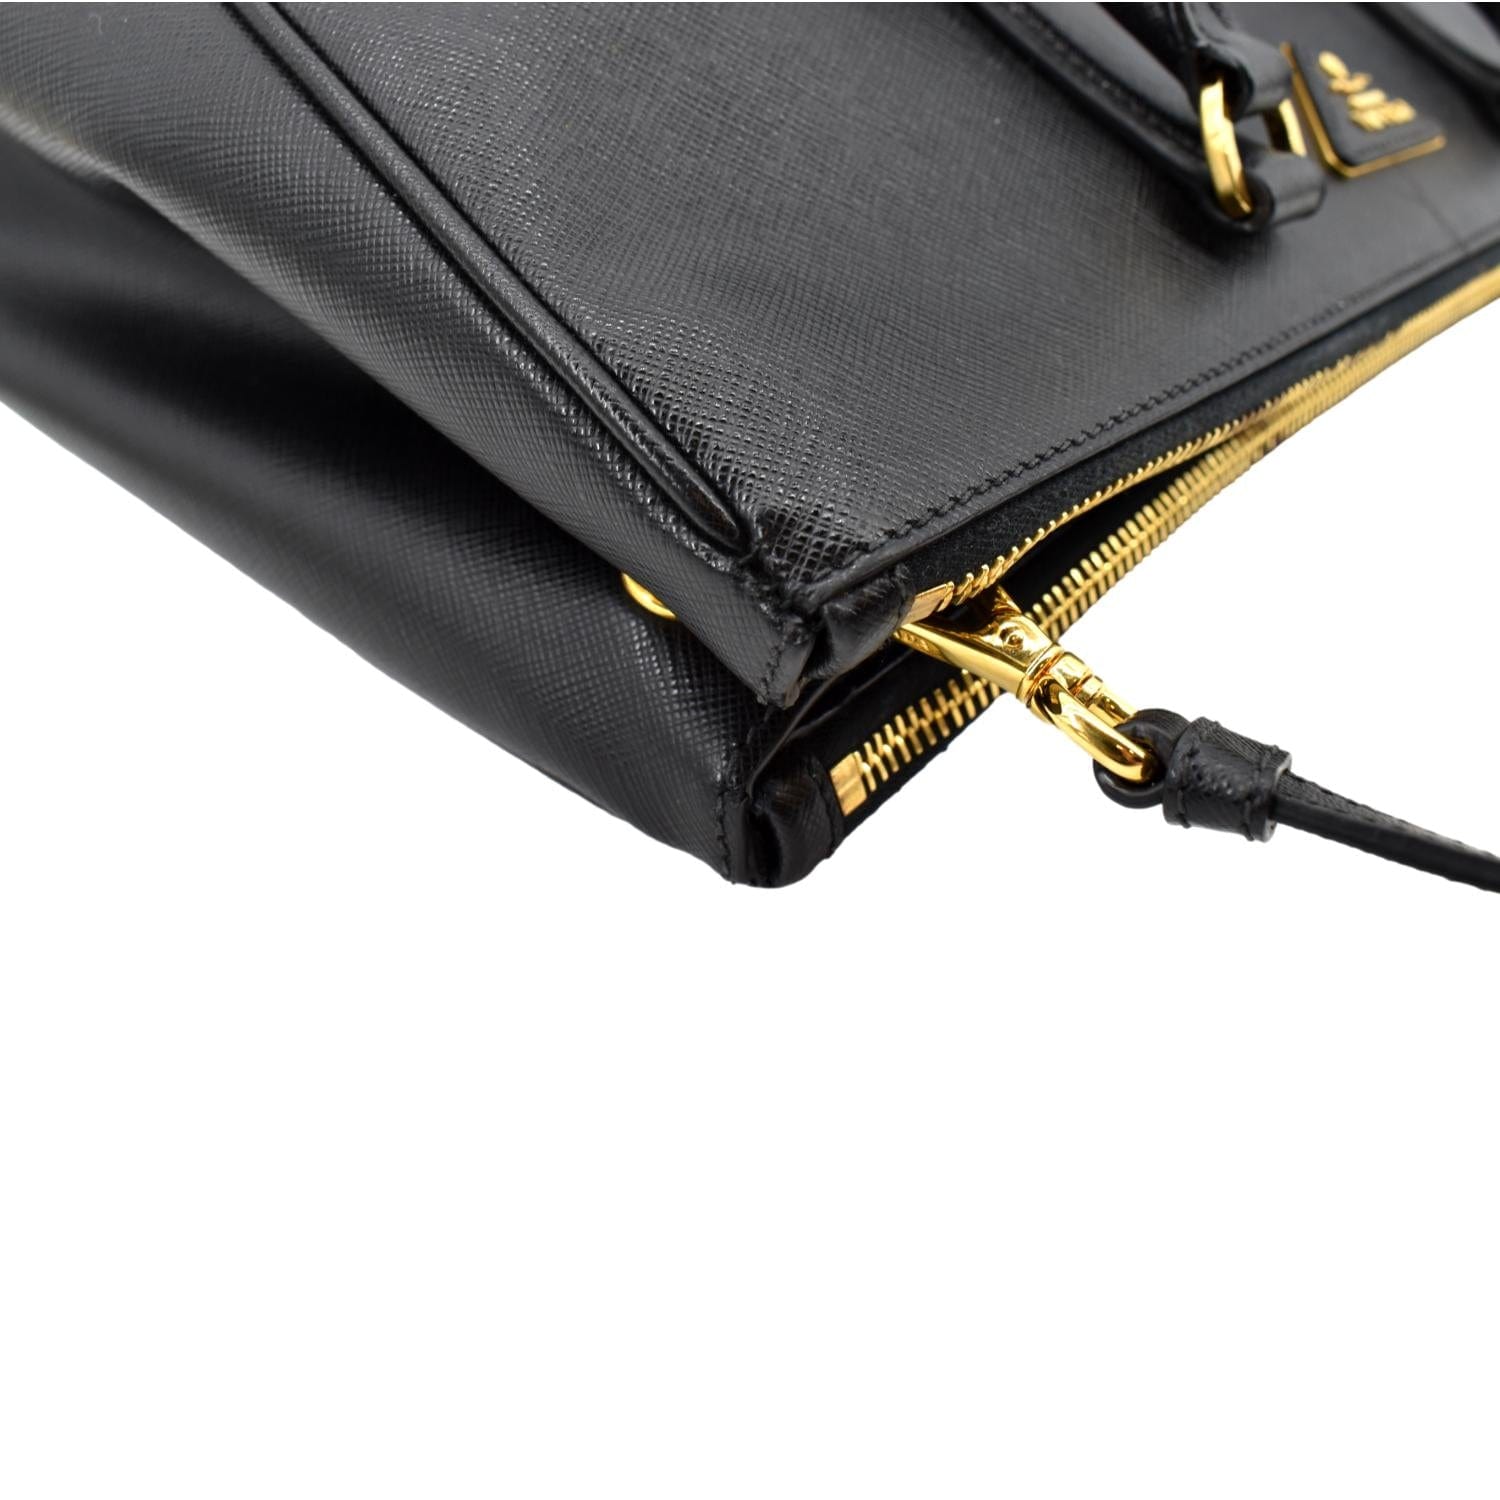 Prada Tote Bag - Prada Large Saffiano Leather Tote Shoulder Bag